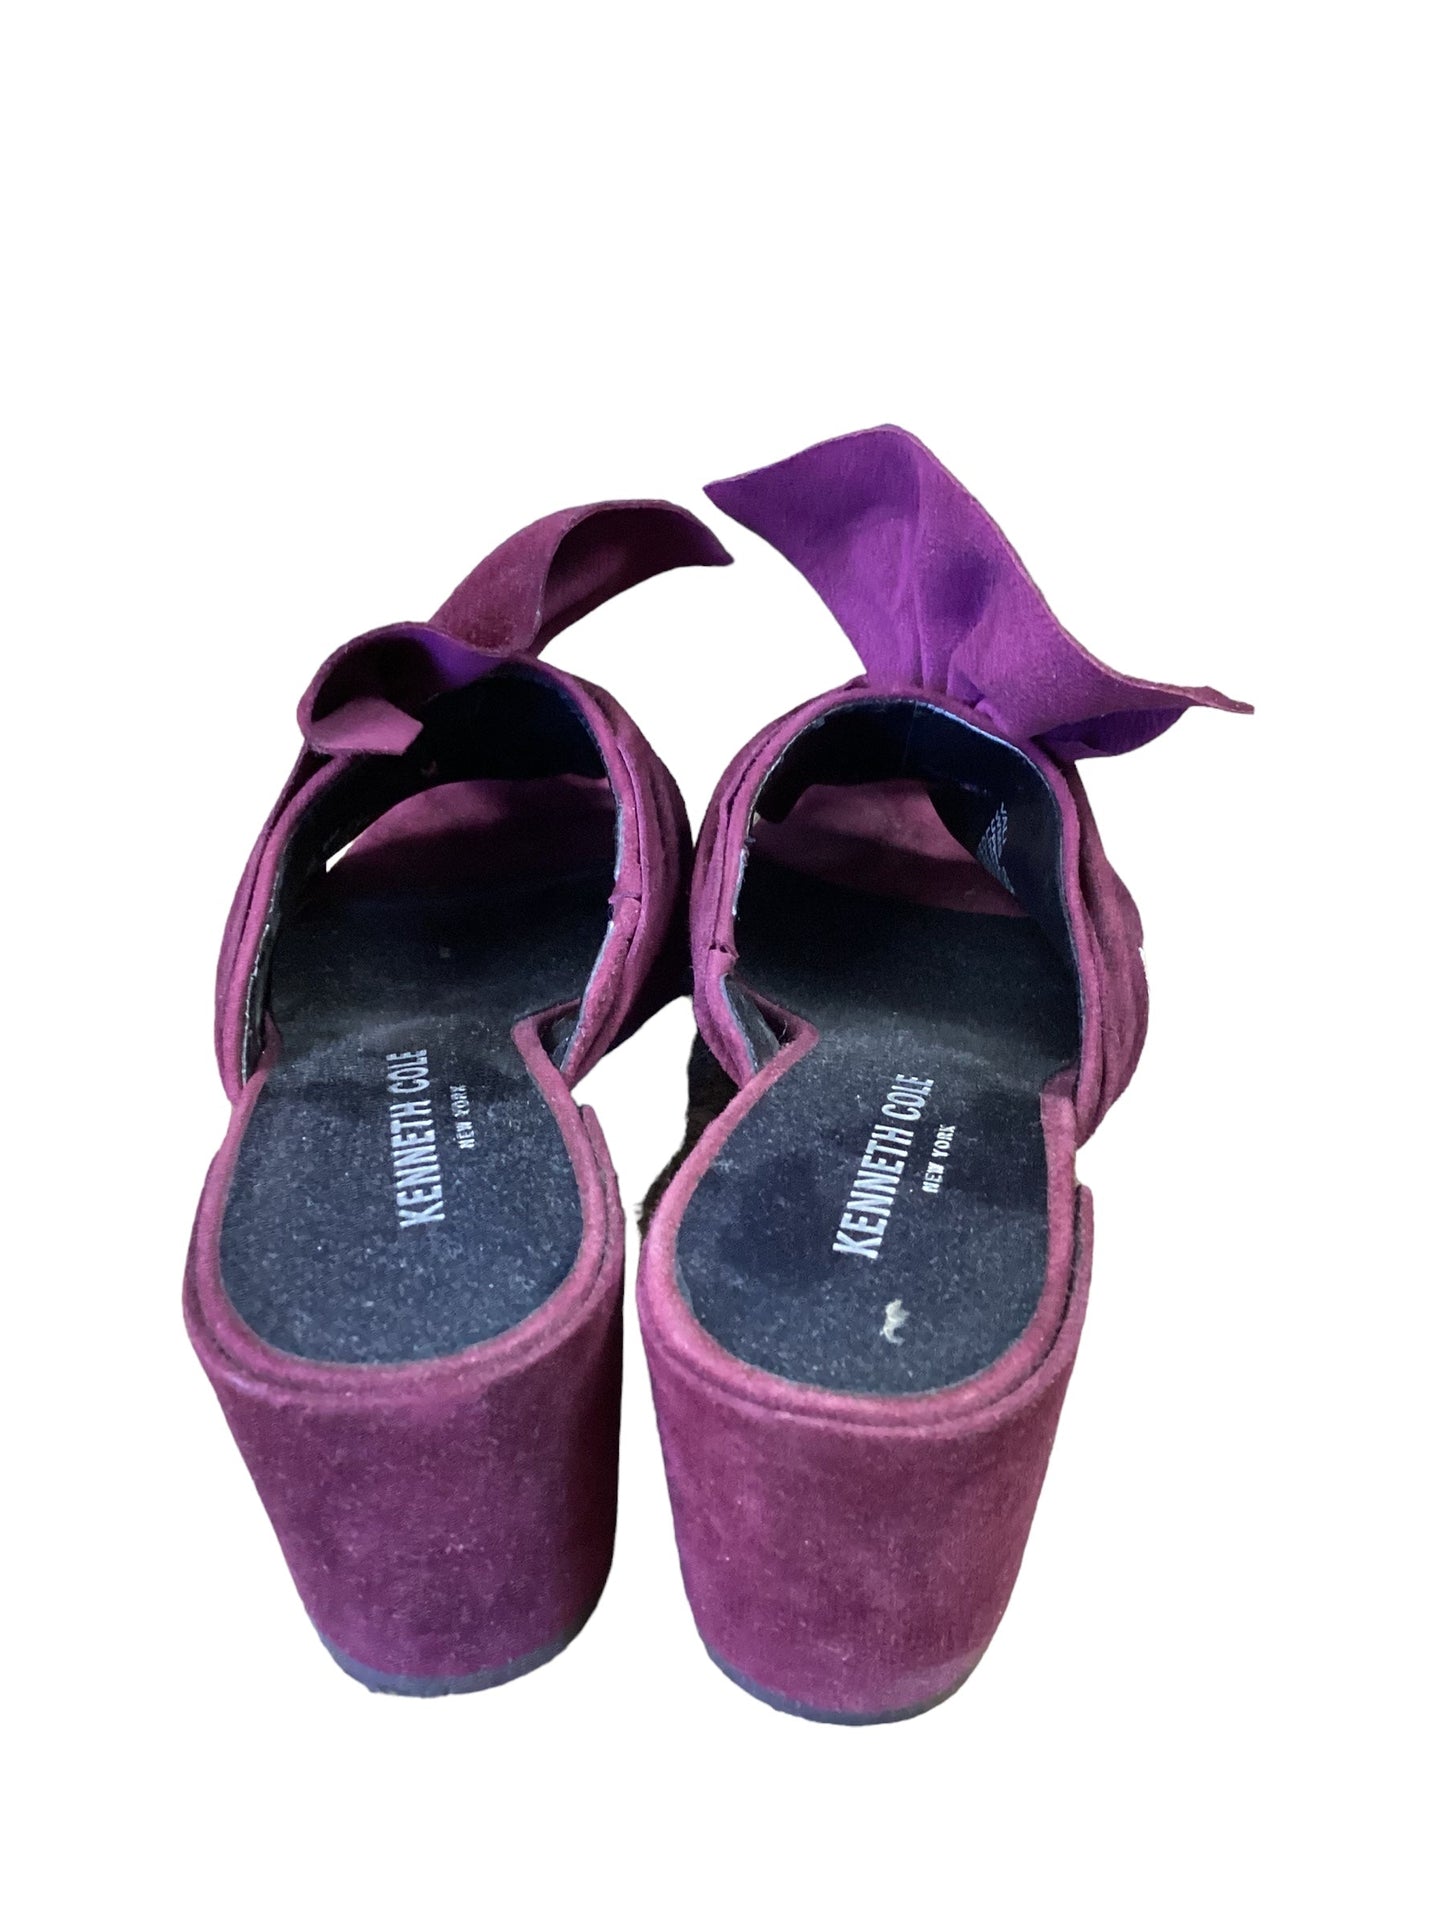 Purple Shoes Heels Block Kenneth Cole, Size 6